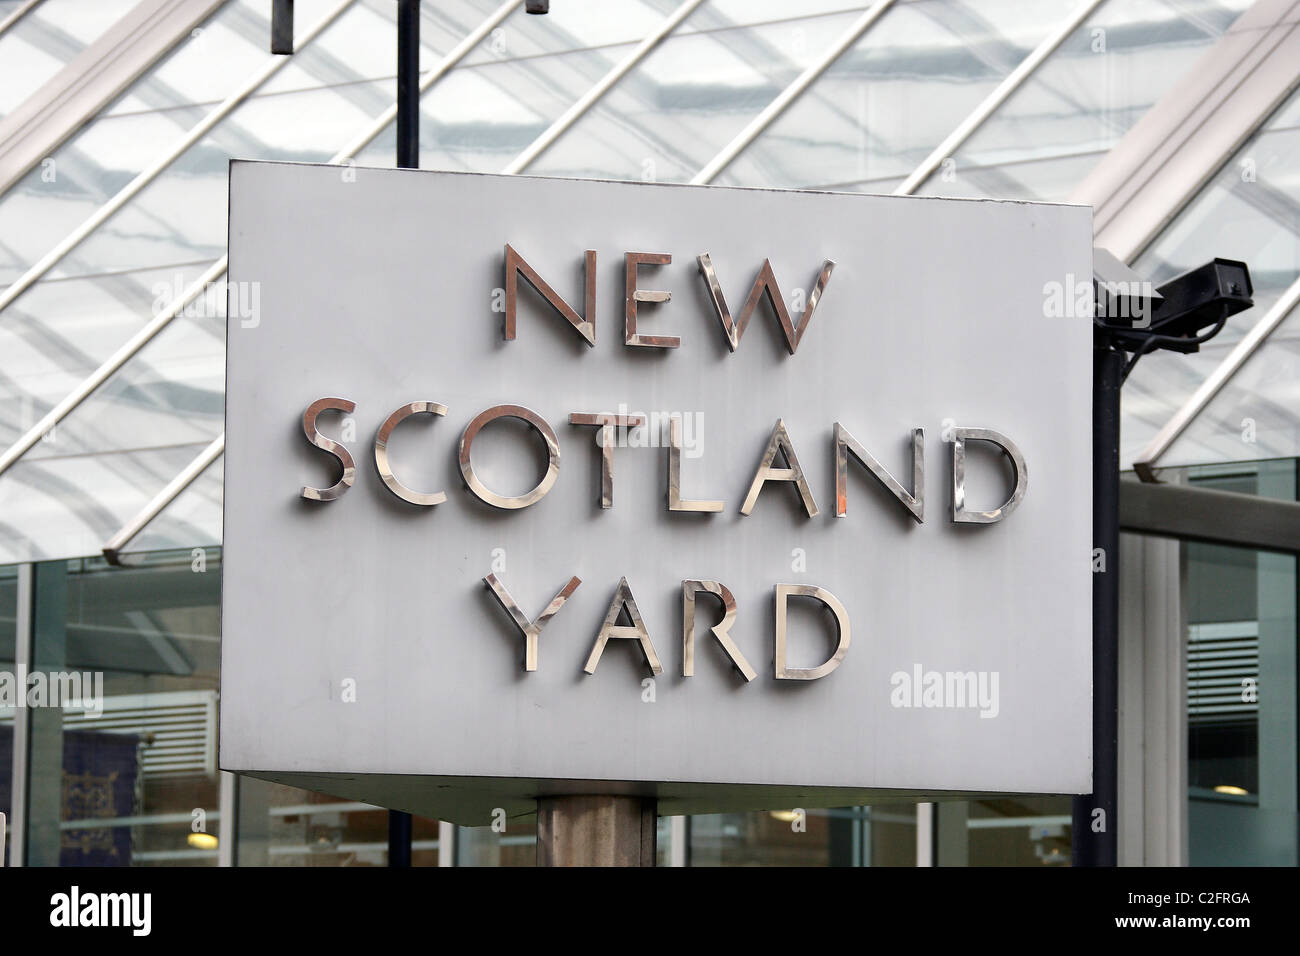 New Scotland Yard sign Foto Stock